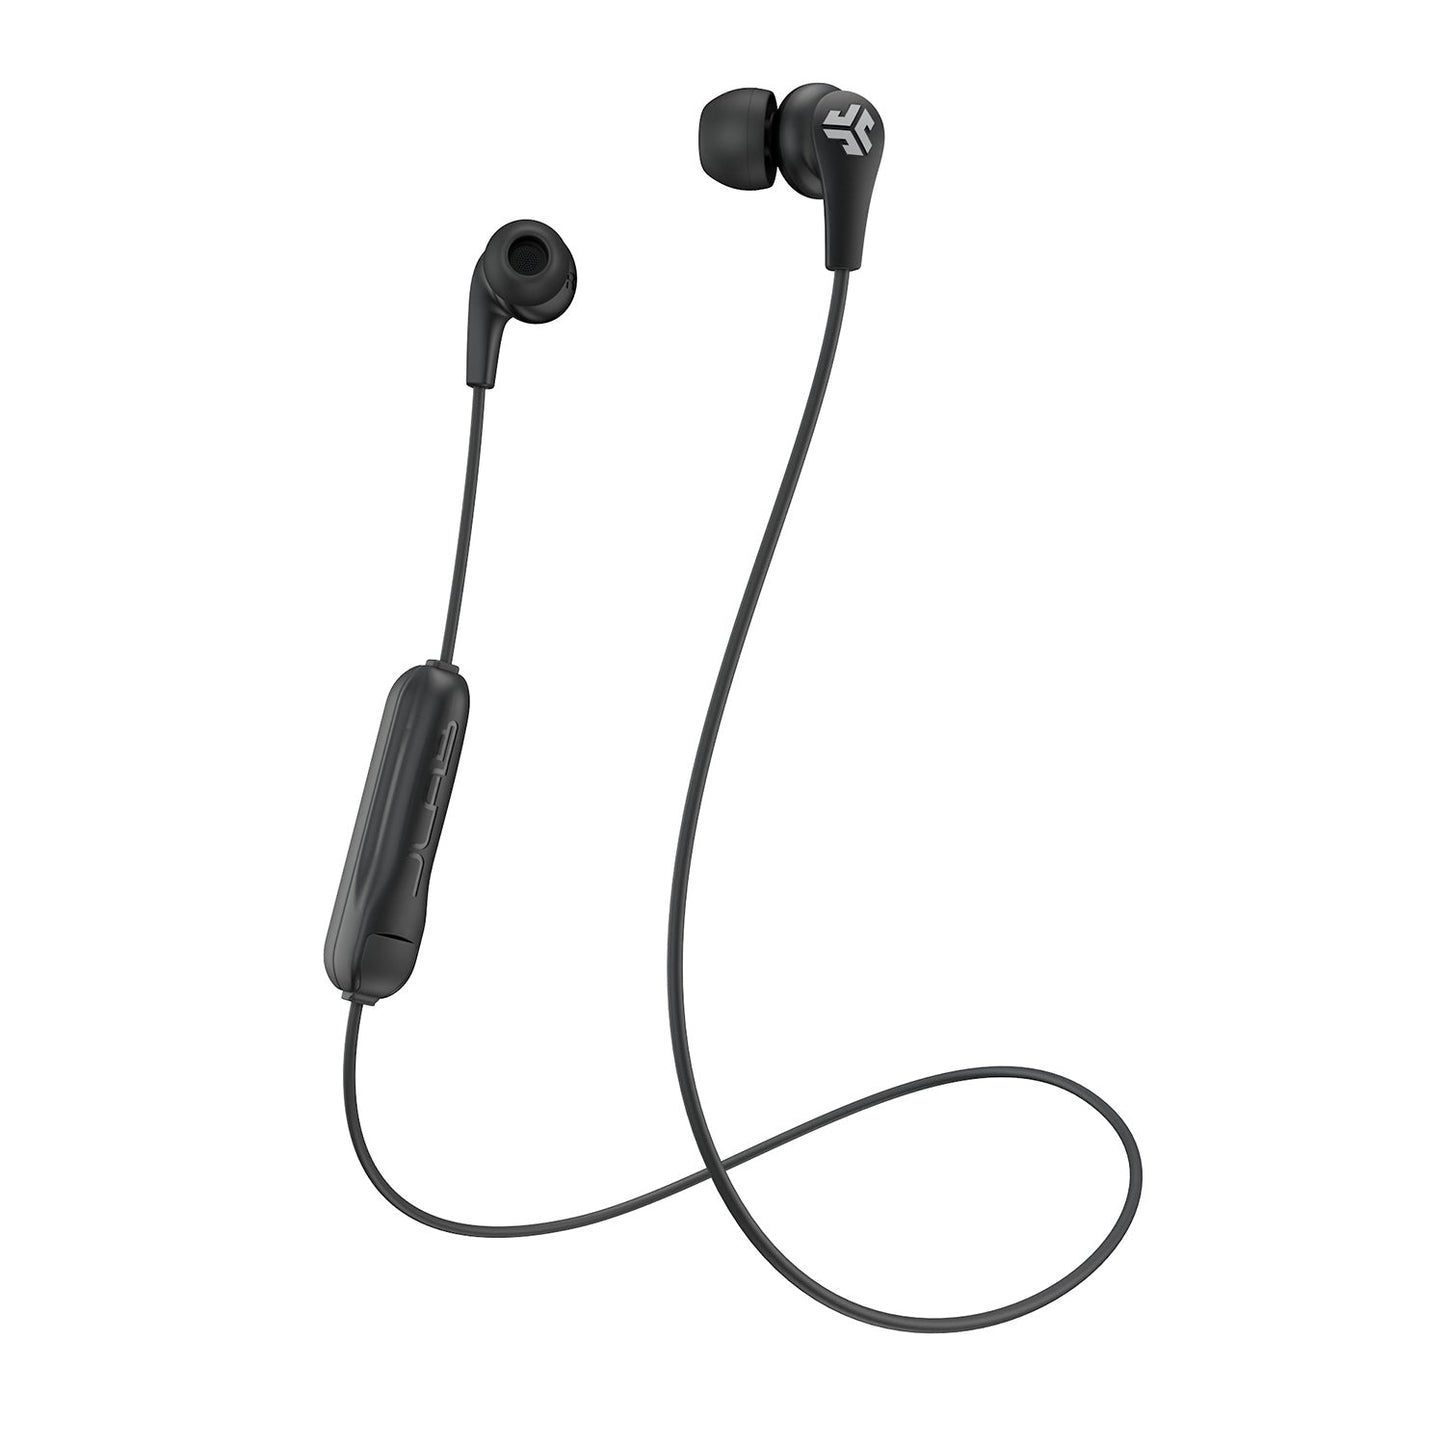 JBUDS PRO Headphones from JLAB (Black)